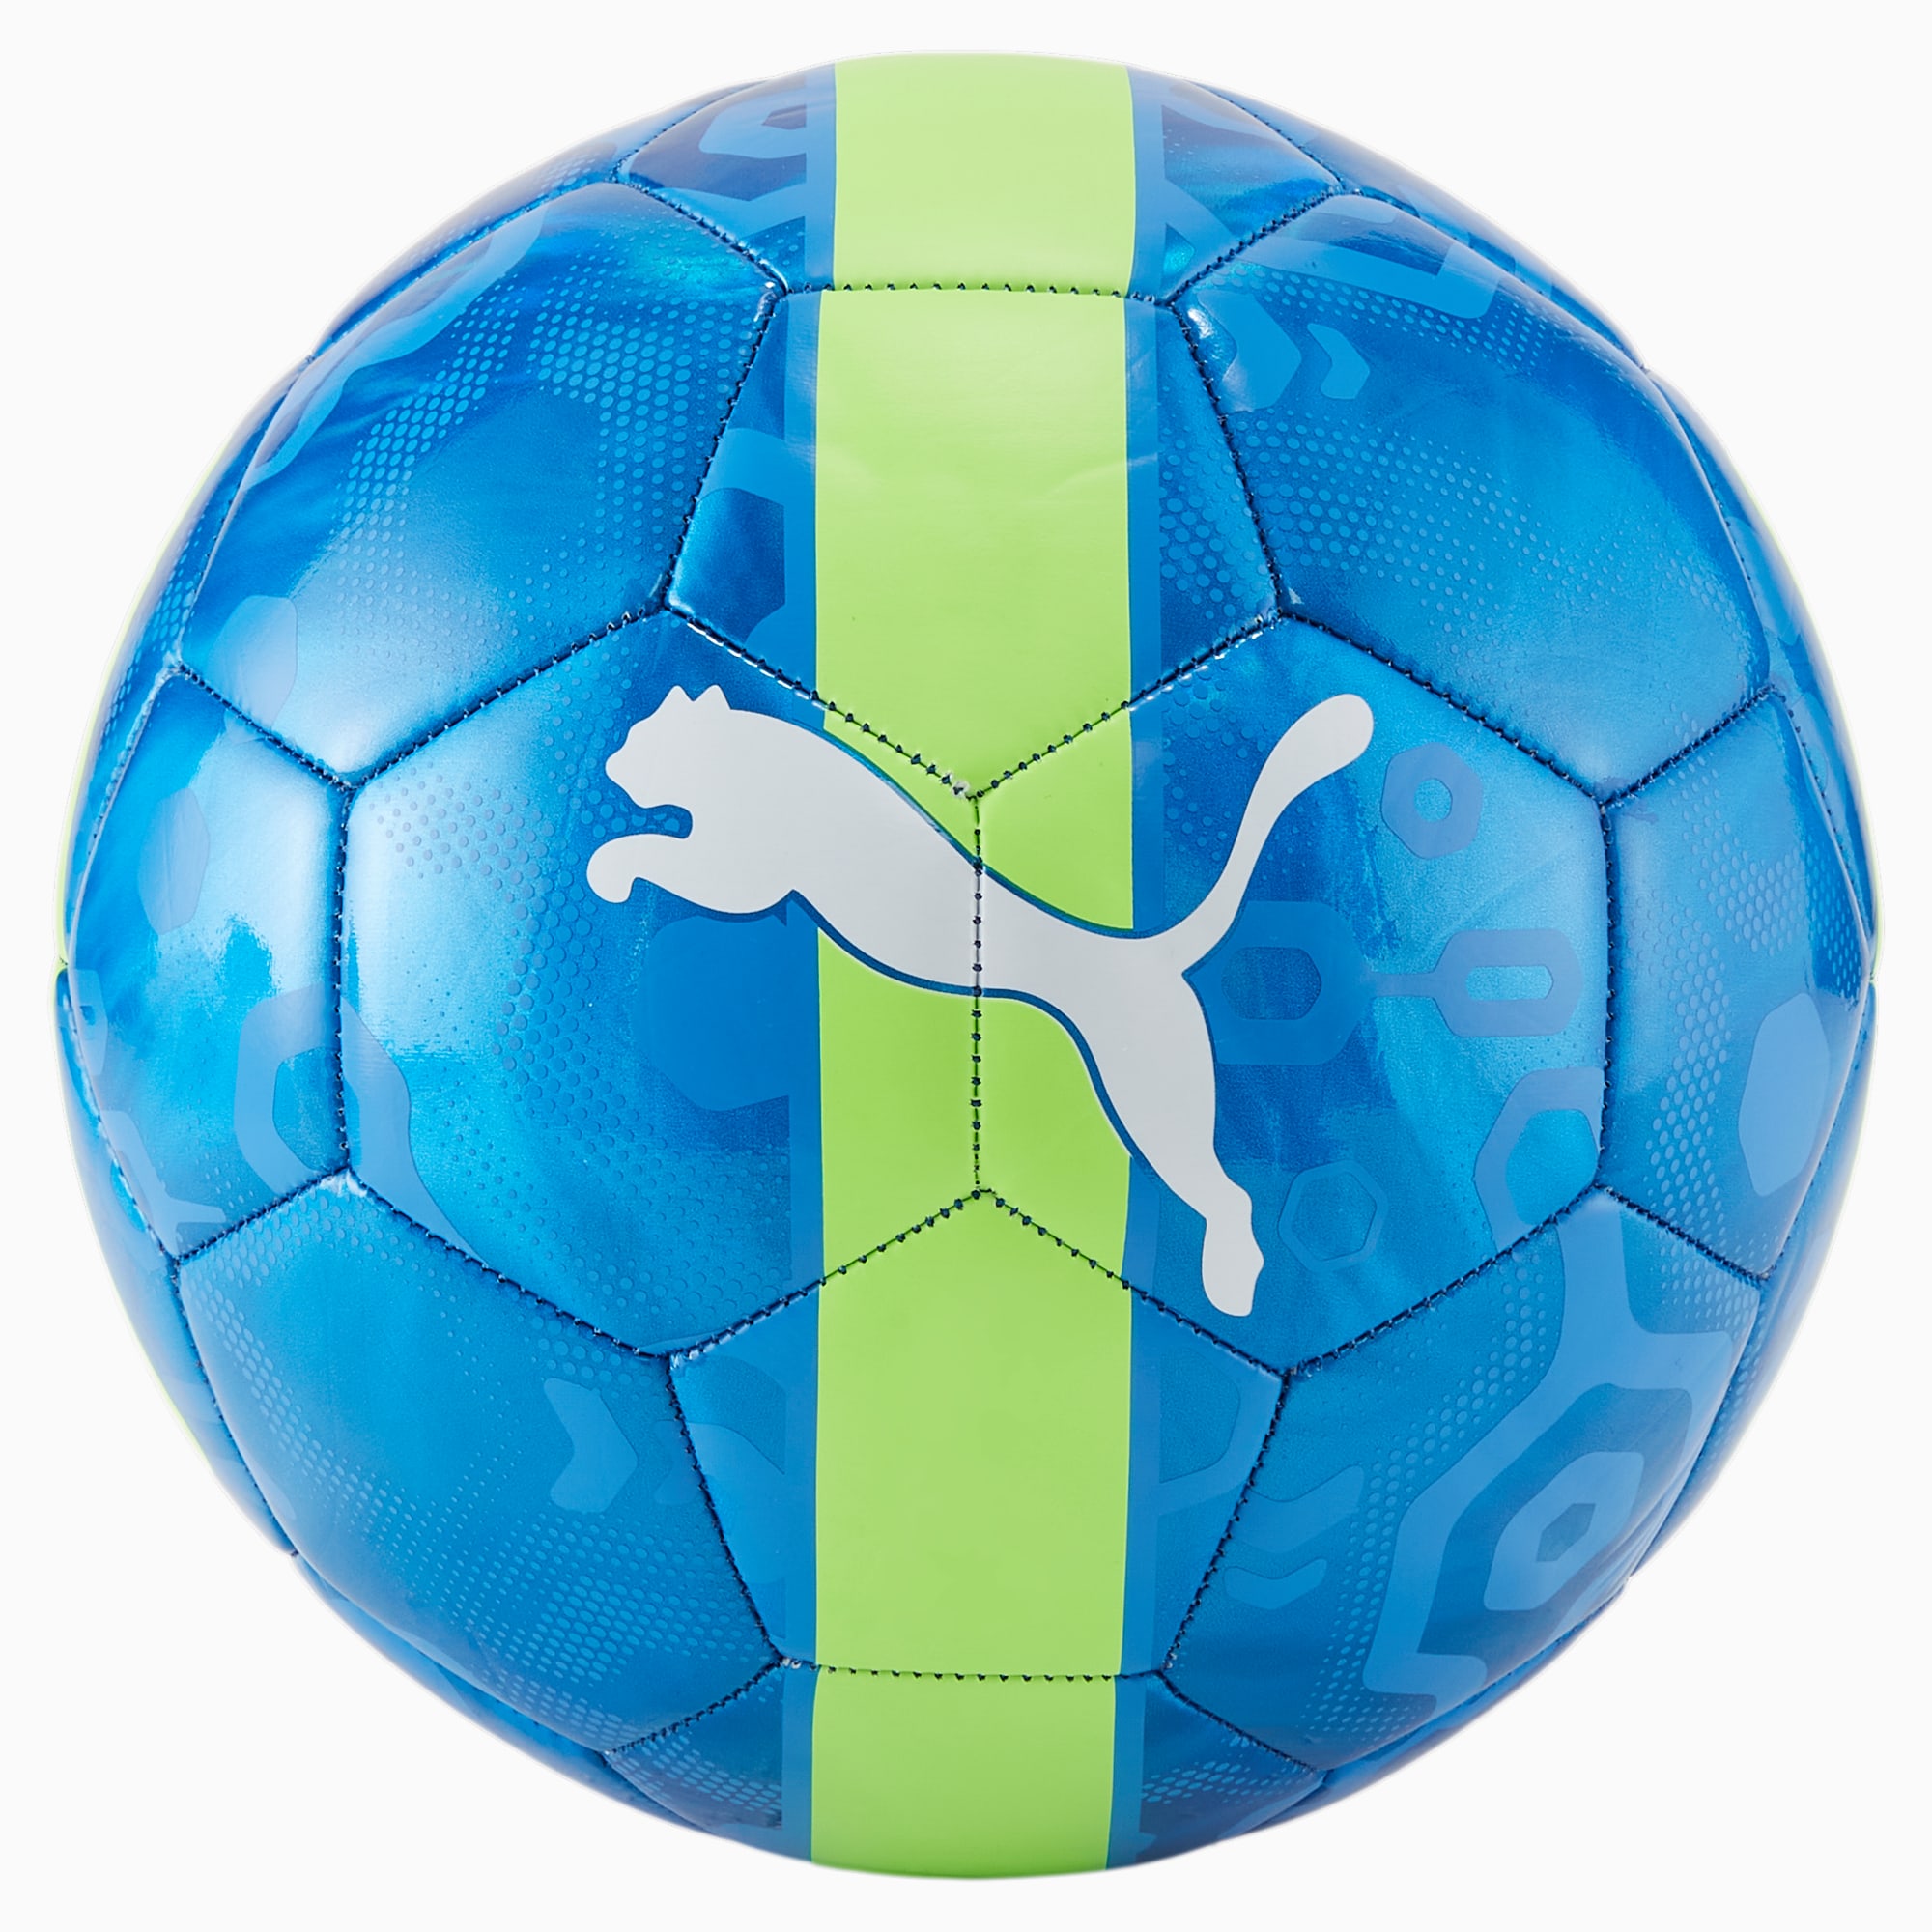 PUMA Cup Fußball, Blau/Grün, Größe: 3